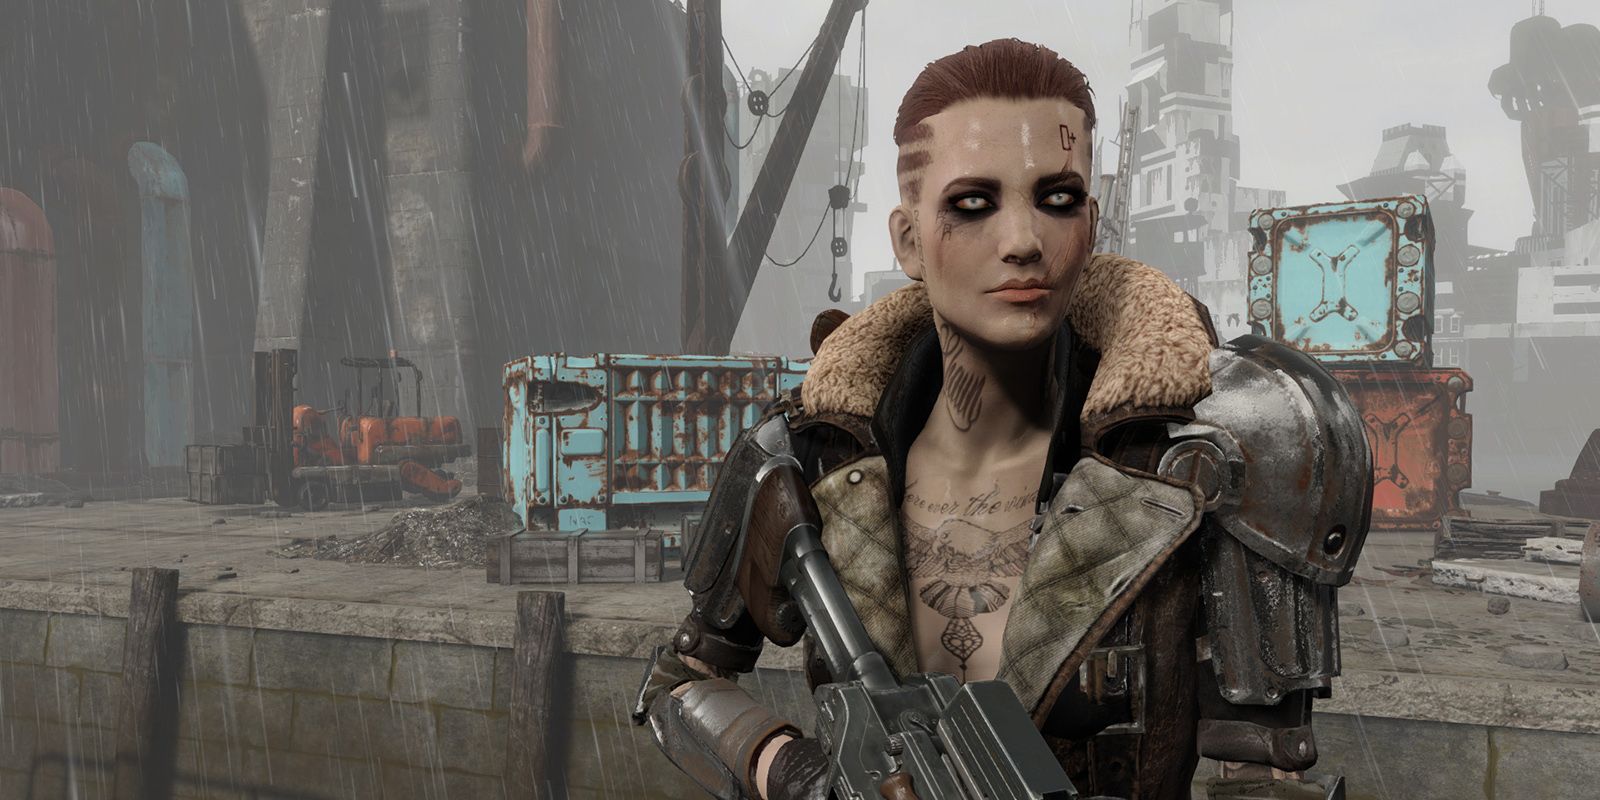 A Raider in Fallout 4